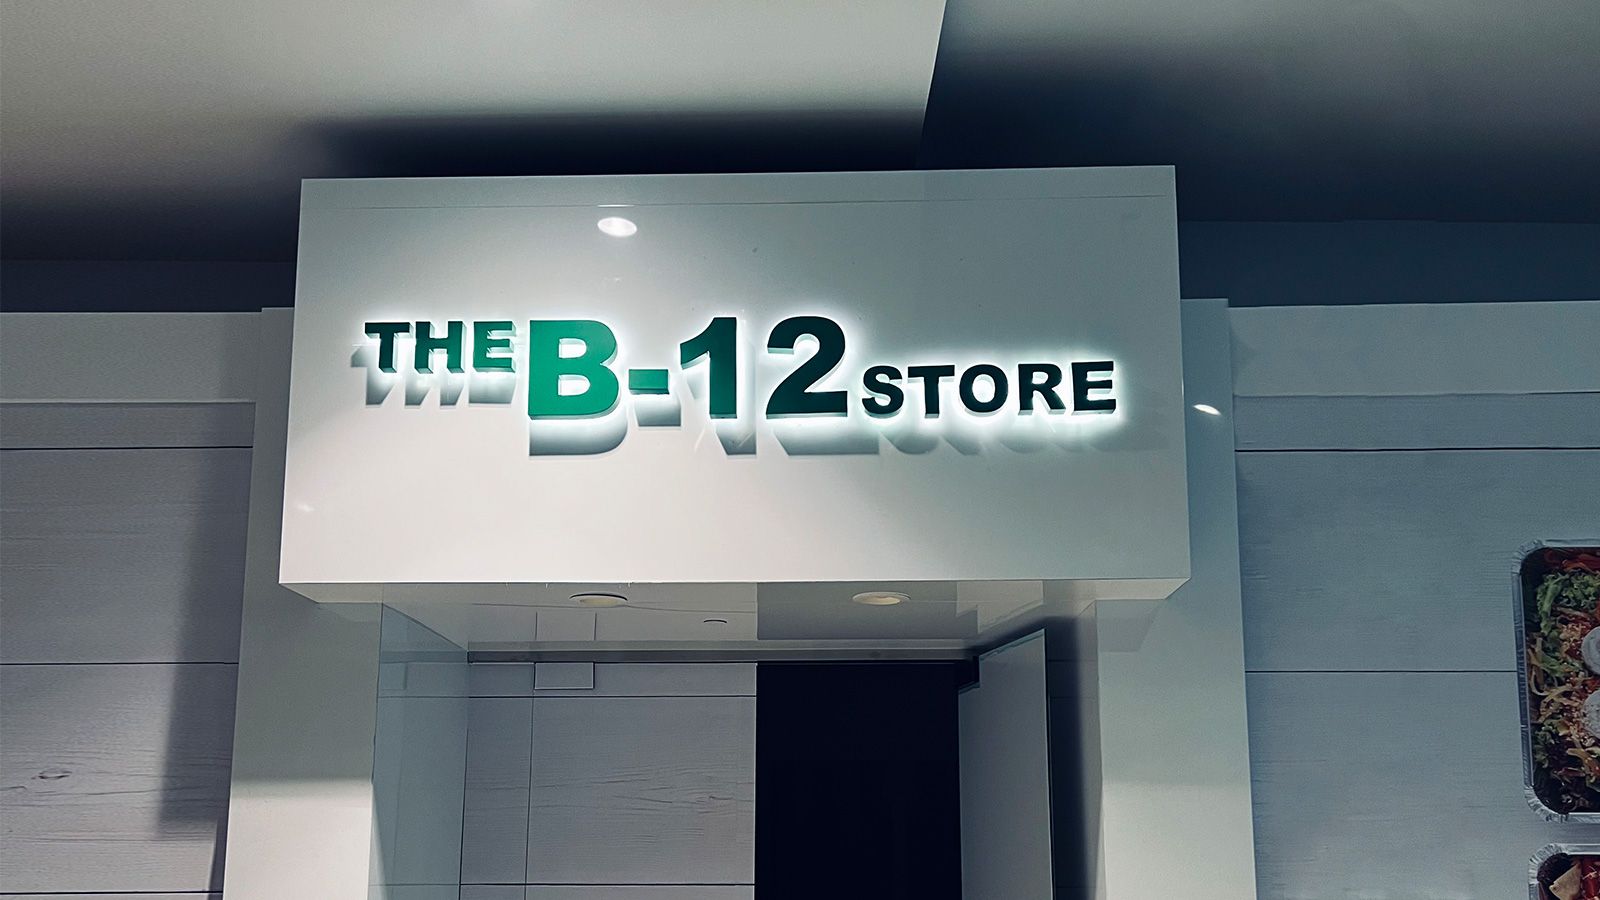 the b-12 store back illuminated sign